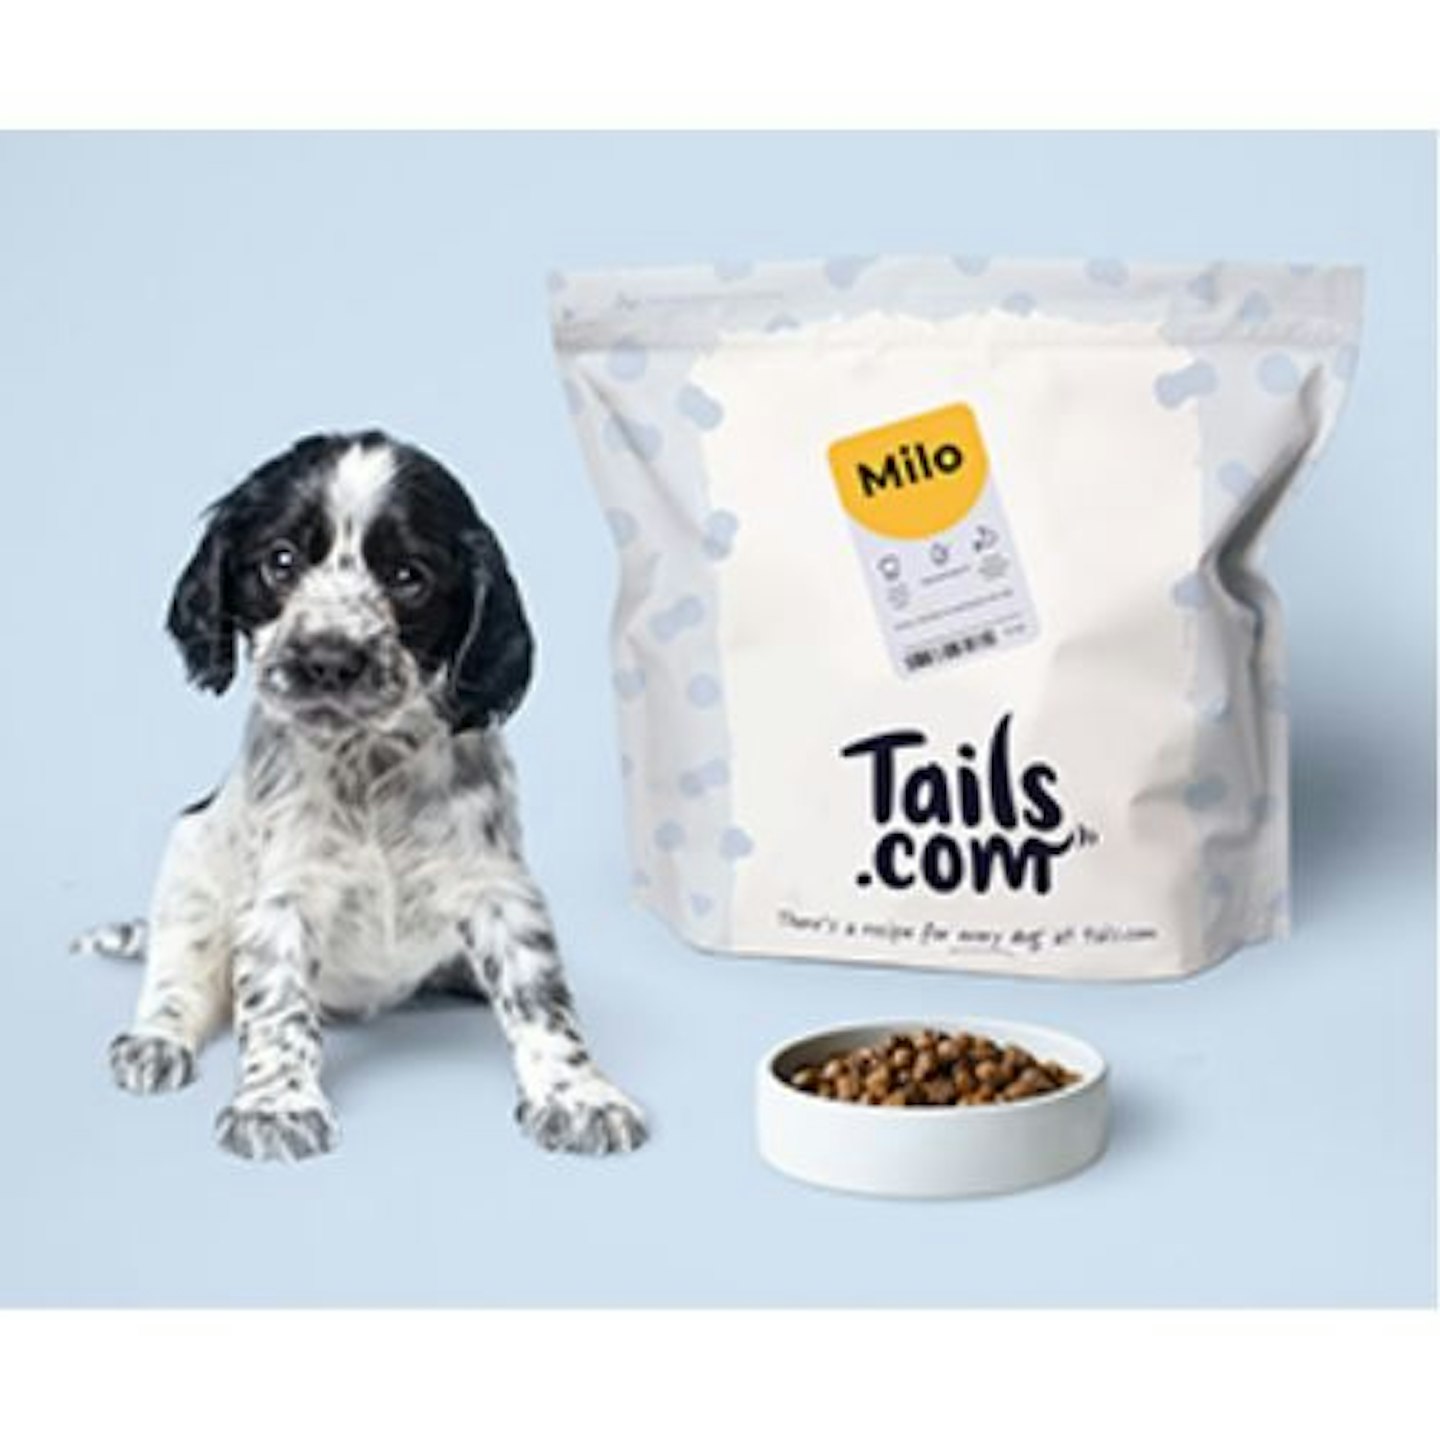 Tails.com Puppy Food